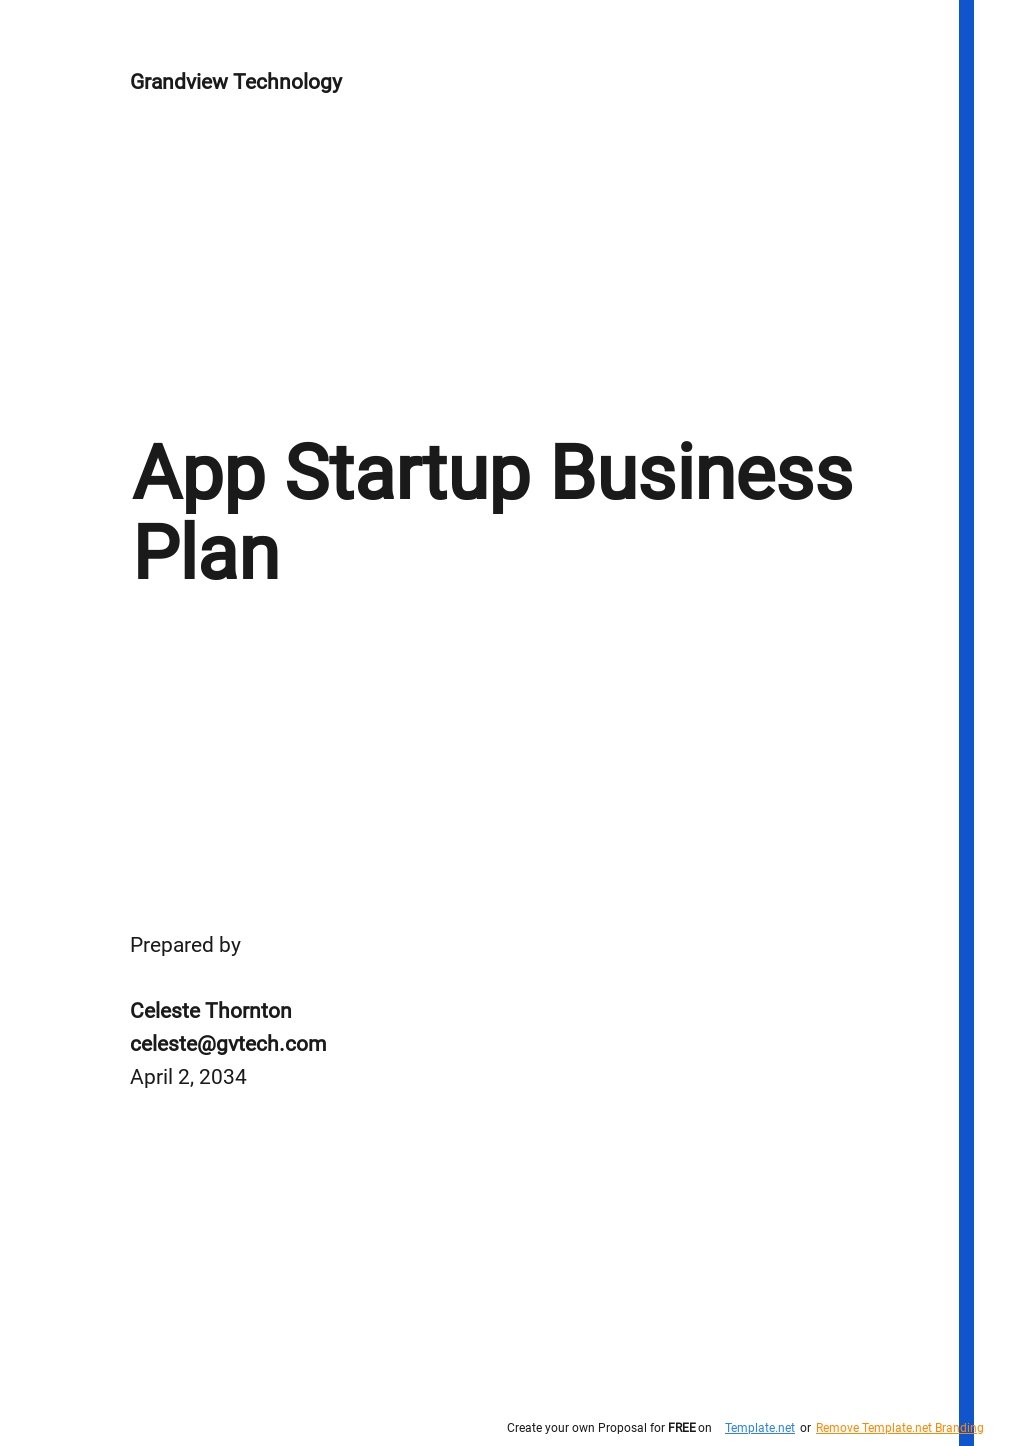 App Startup Business Plan Template